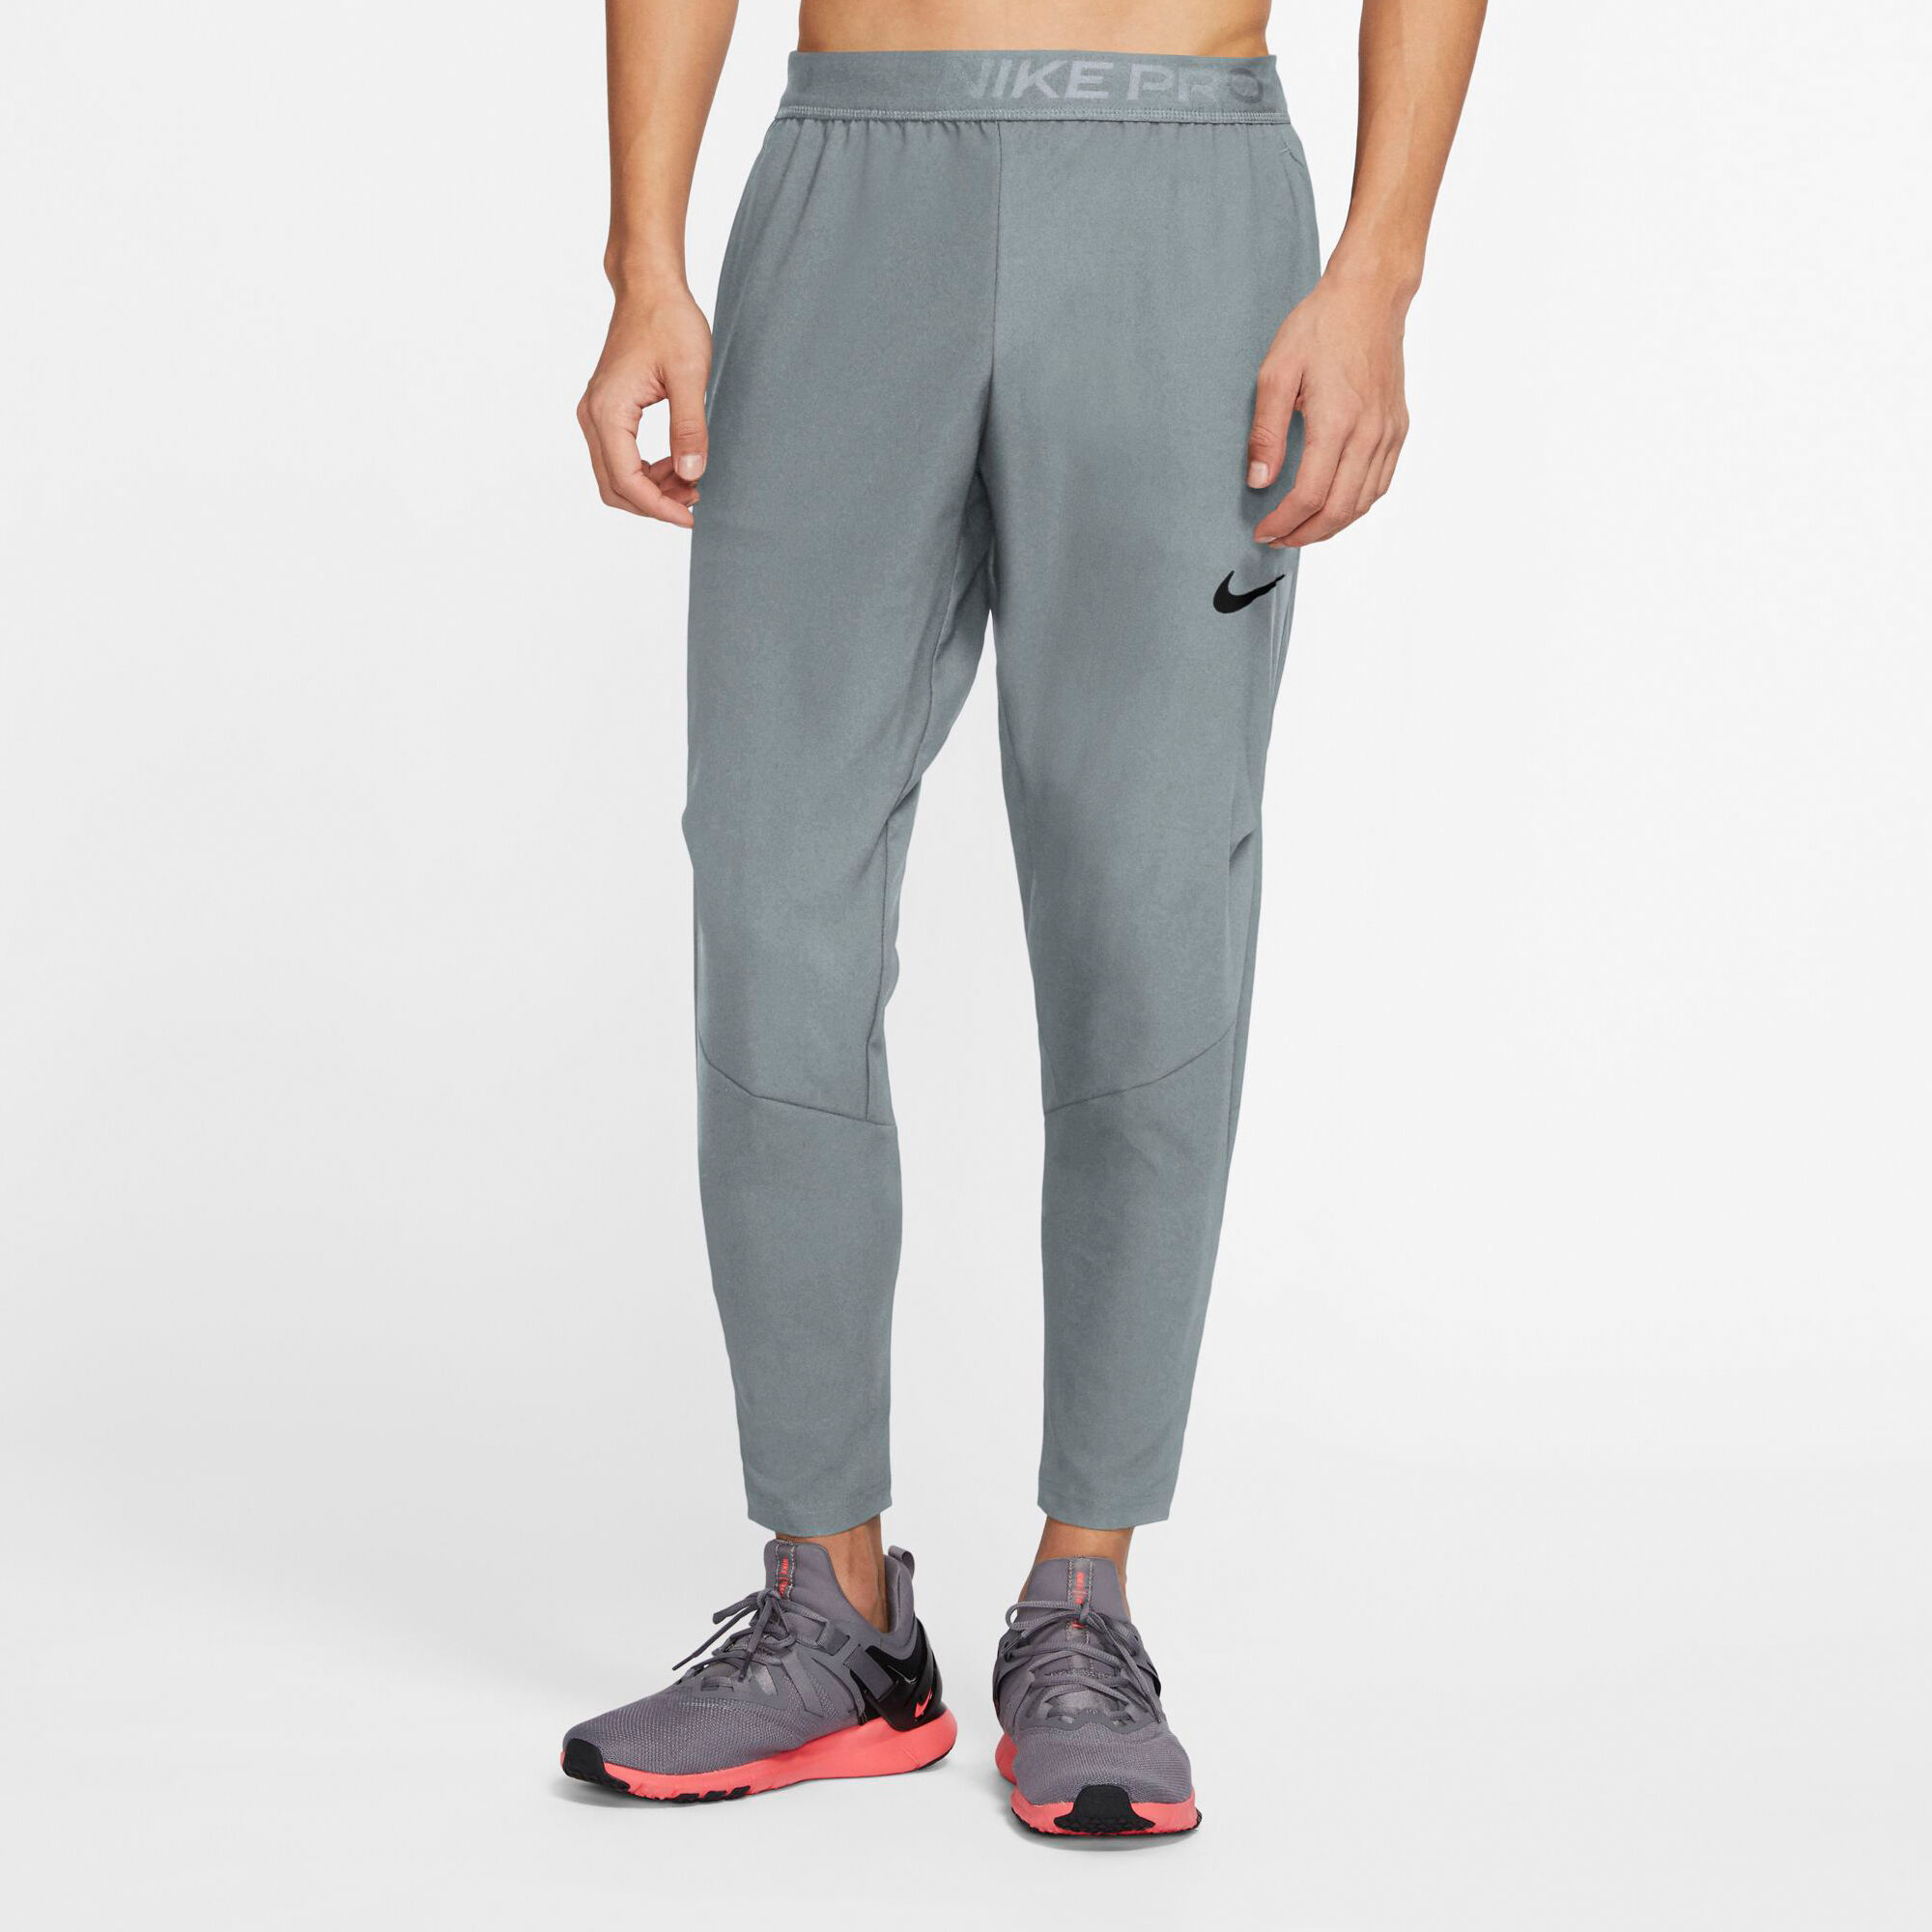 Nike Flex Pants SequoiaBlackElectric GreenPale Ivory  Amazonin  Clothing  Accessories